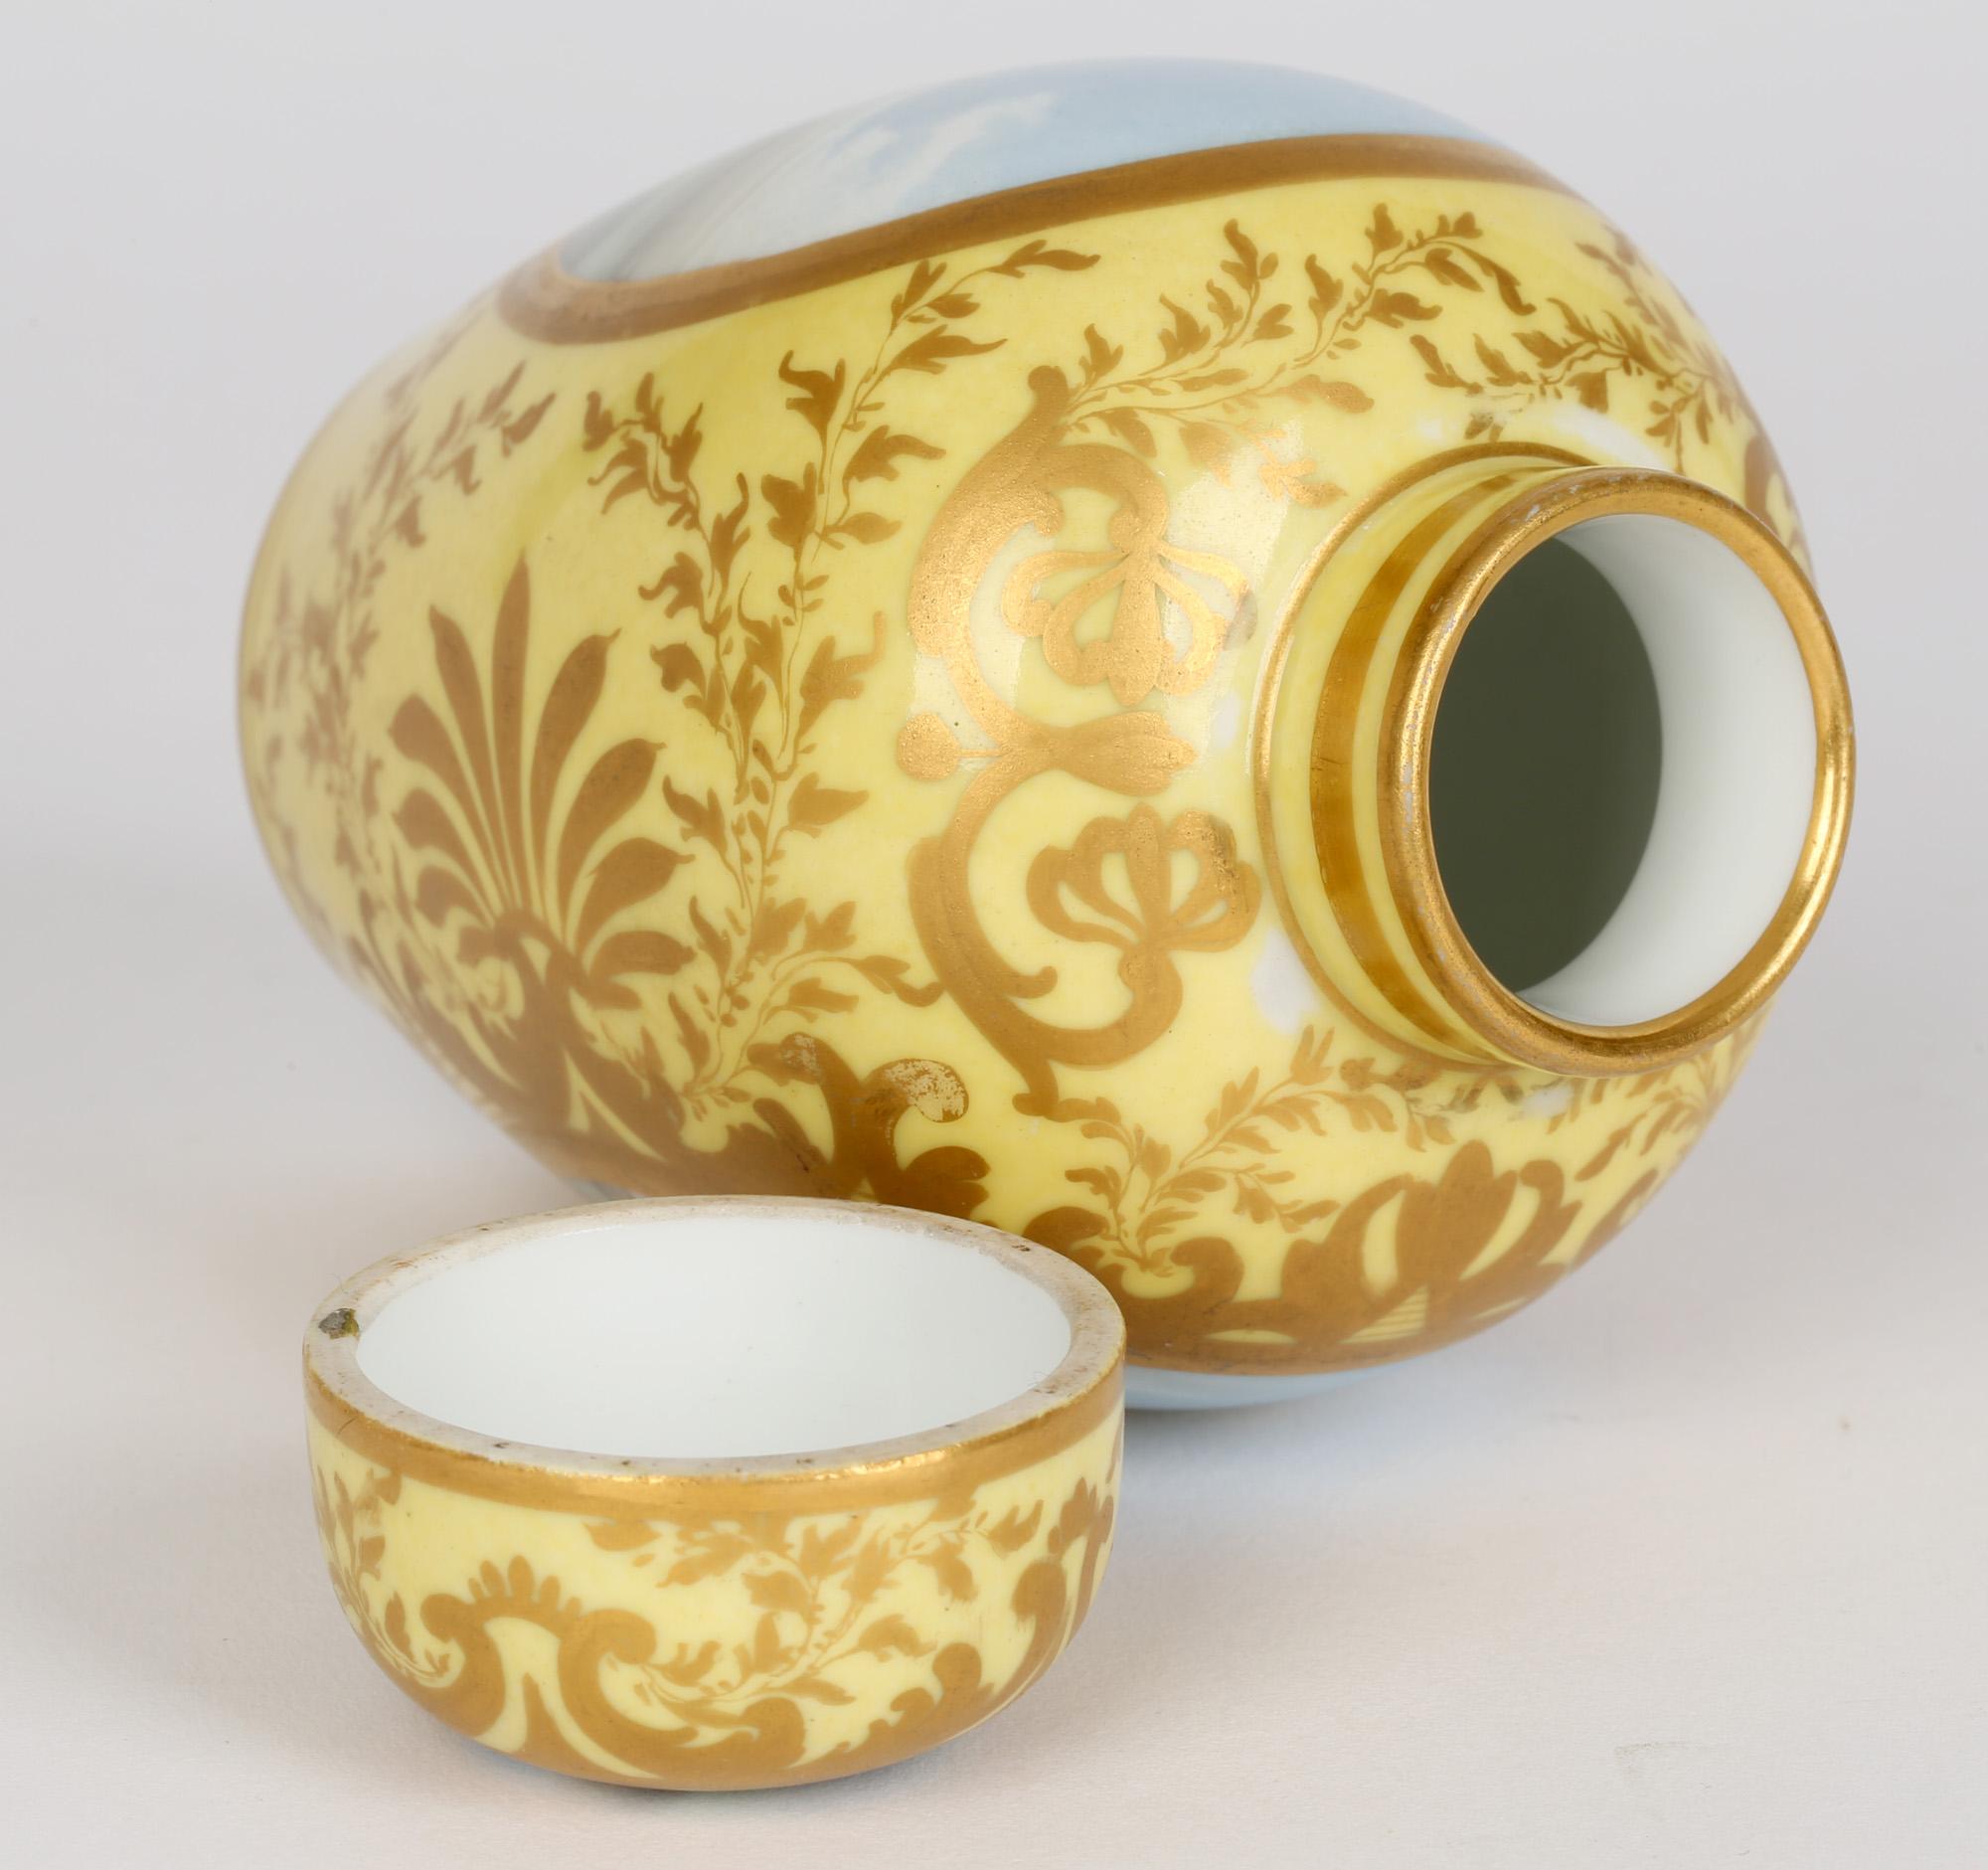 Napoleon III Paris Porcelain Lidded Porcelain Tea Caddy with Scenes of Venice